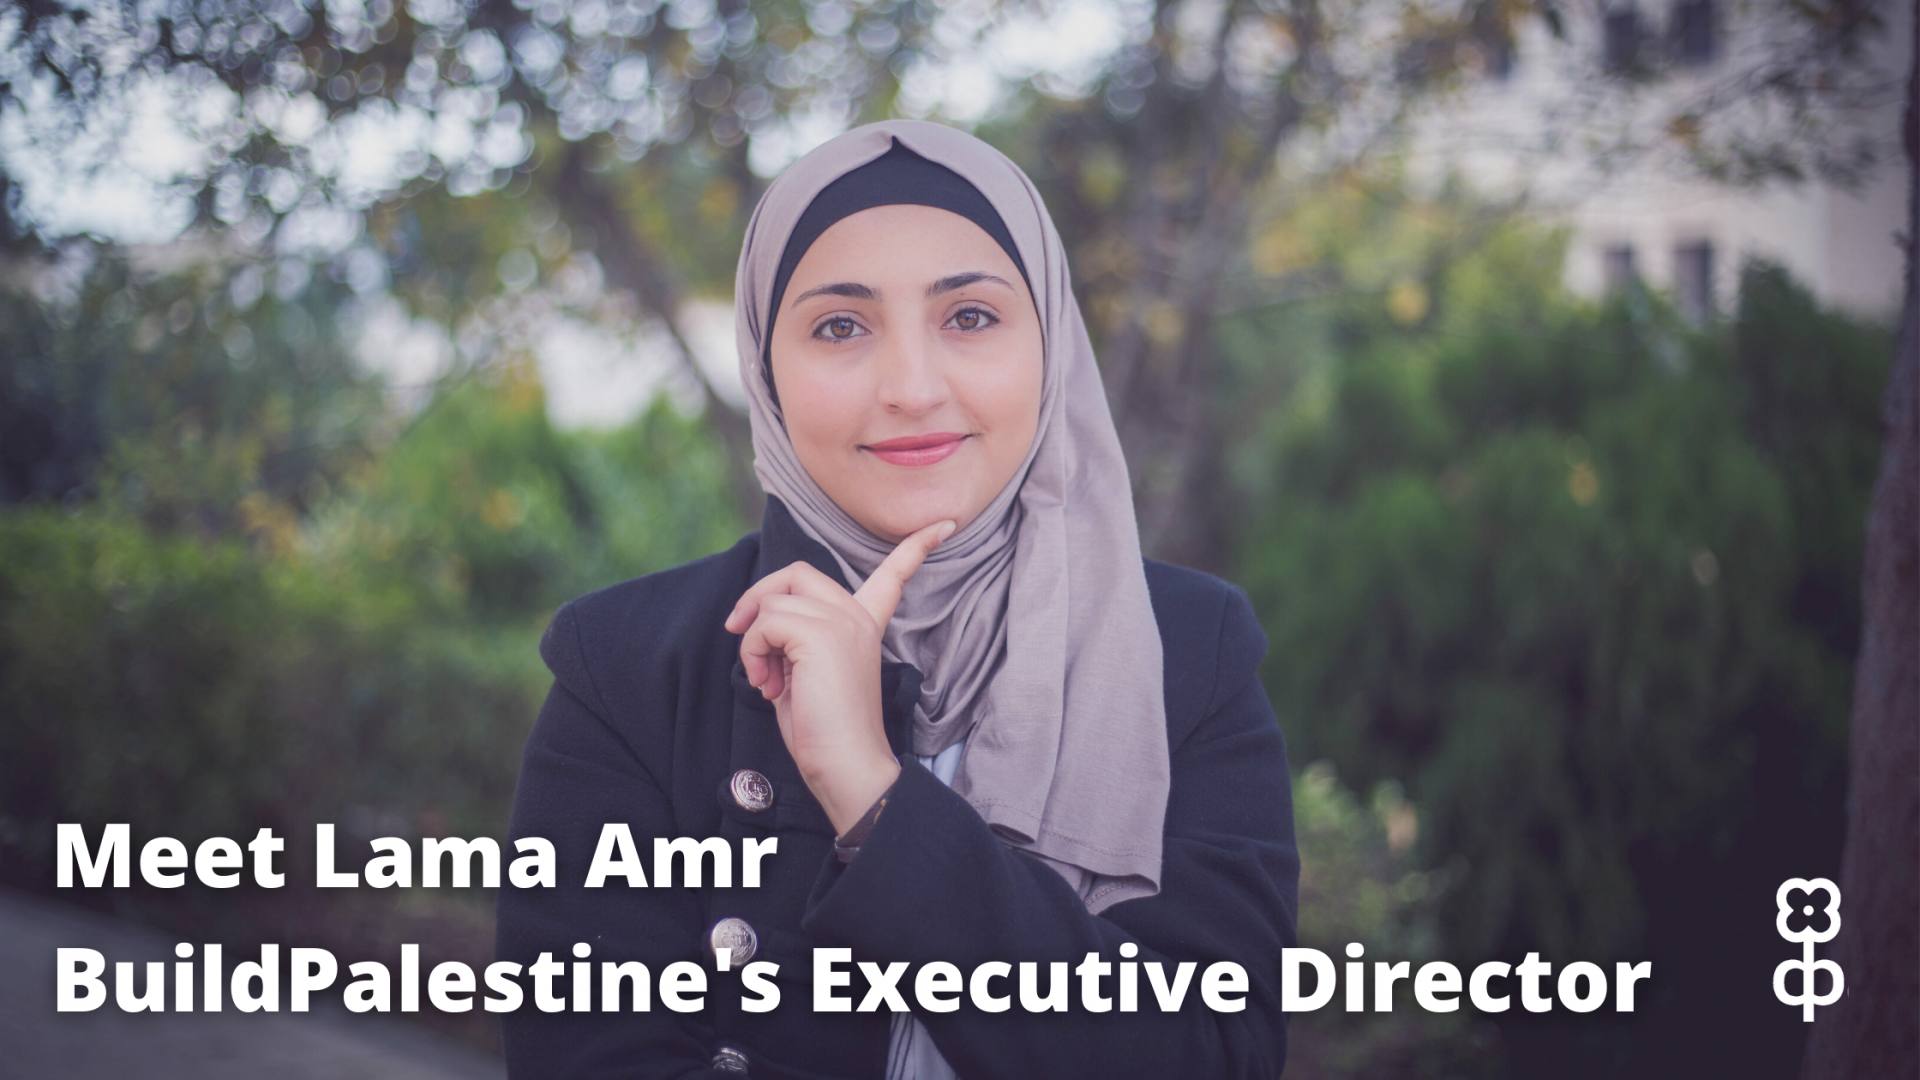 Meet Lama Amr, BuildPalestine’s Executive Director